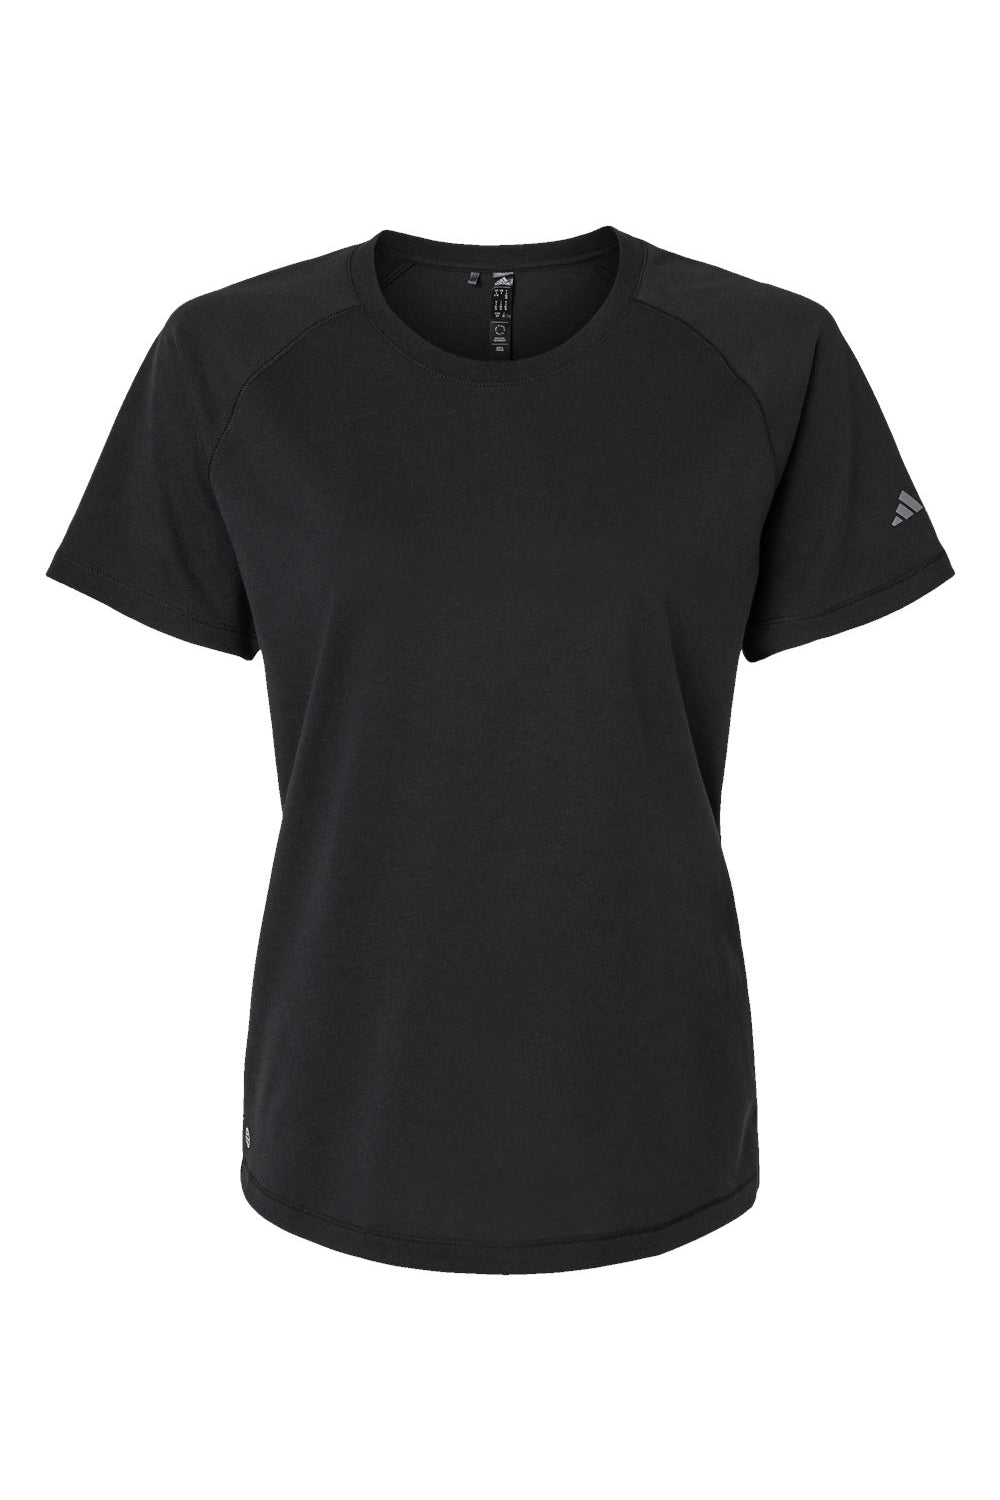 Adidas A557 Womens Short Sleeve Crewneck T-Shirt Black Flat Front